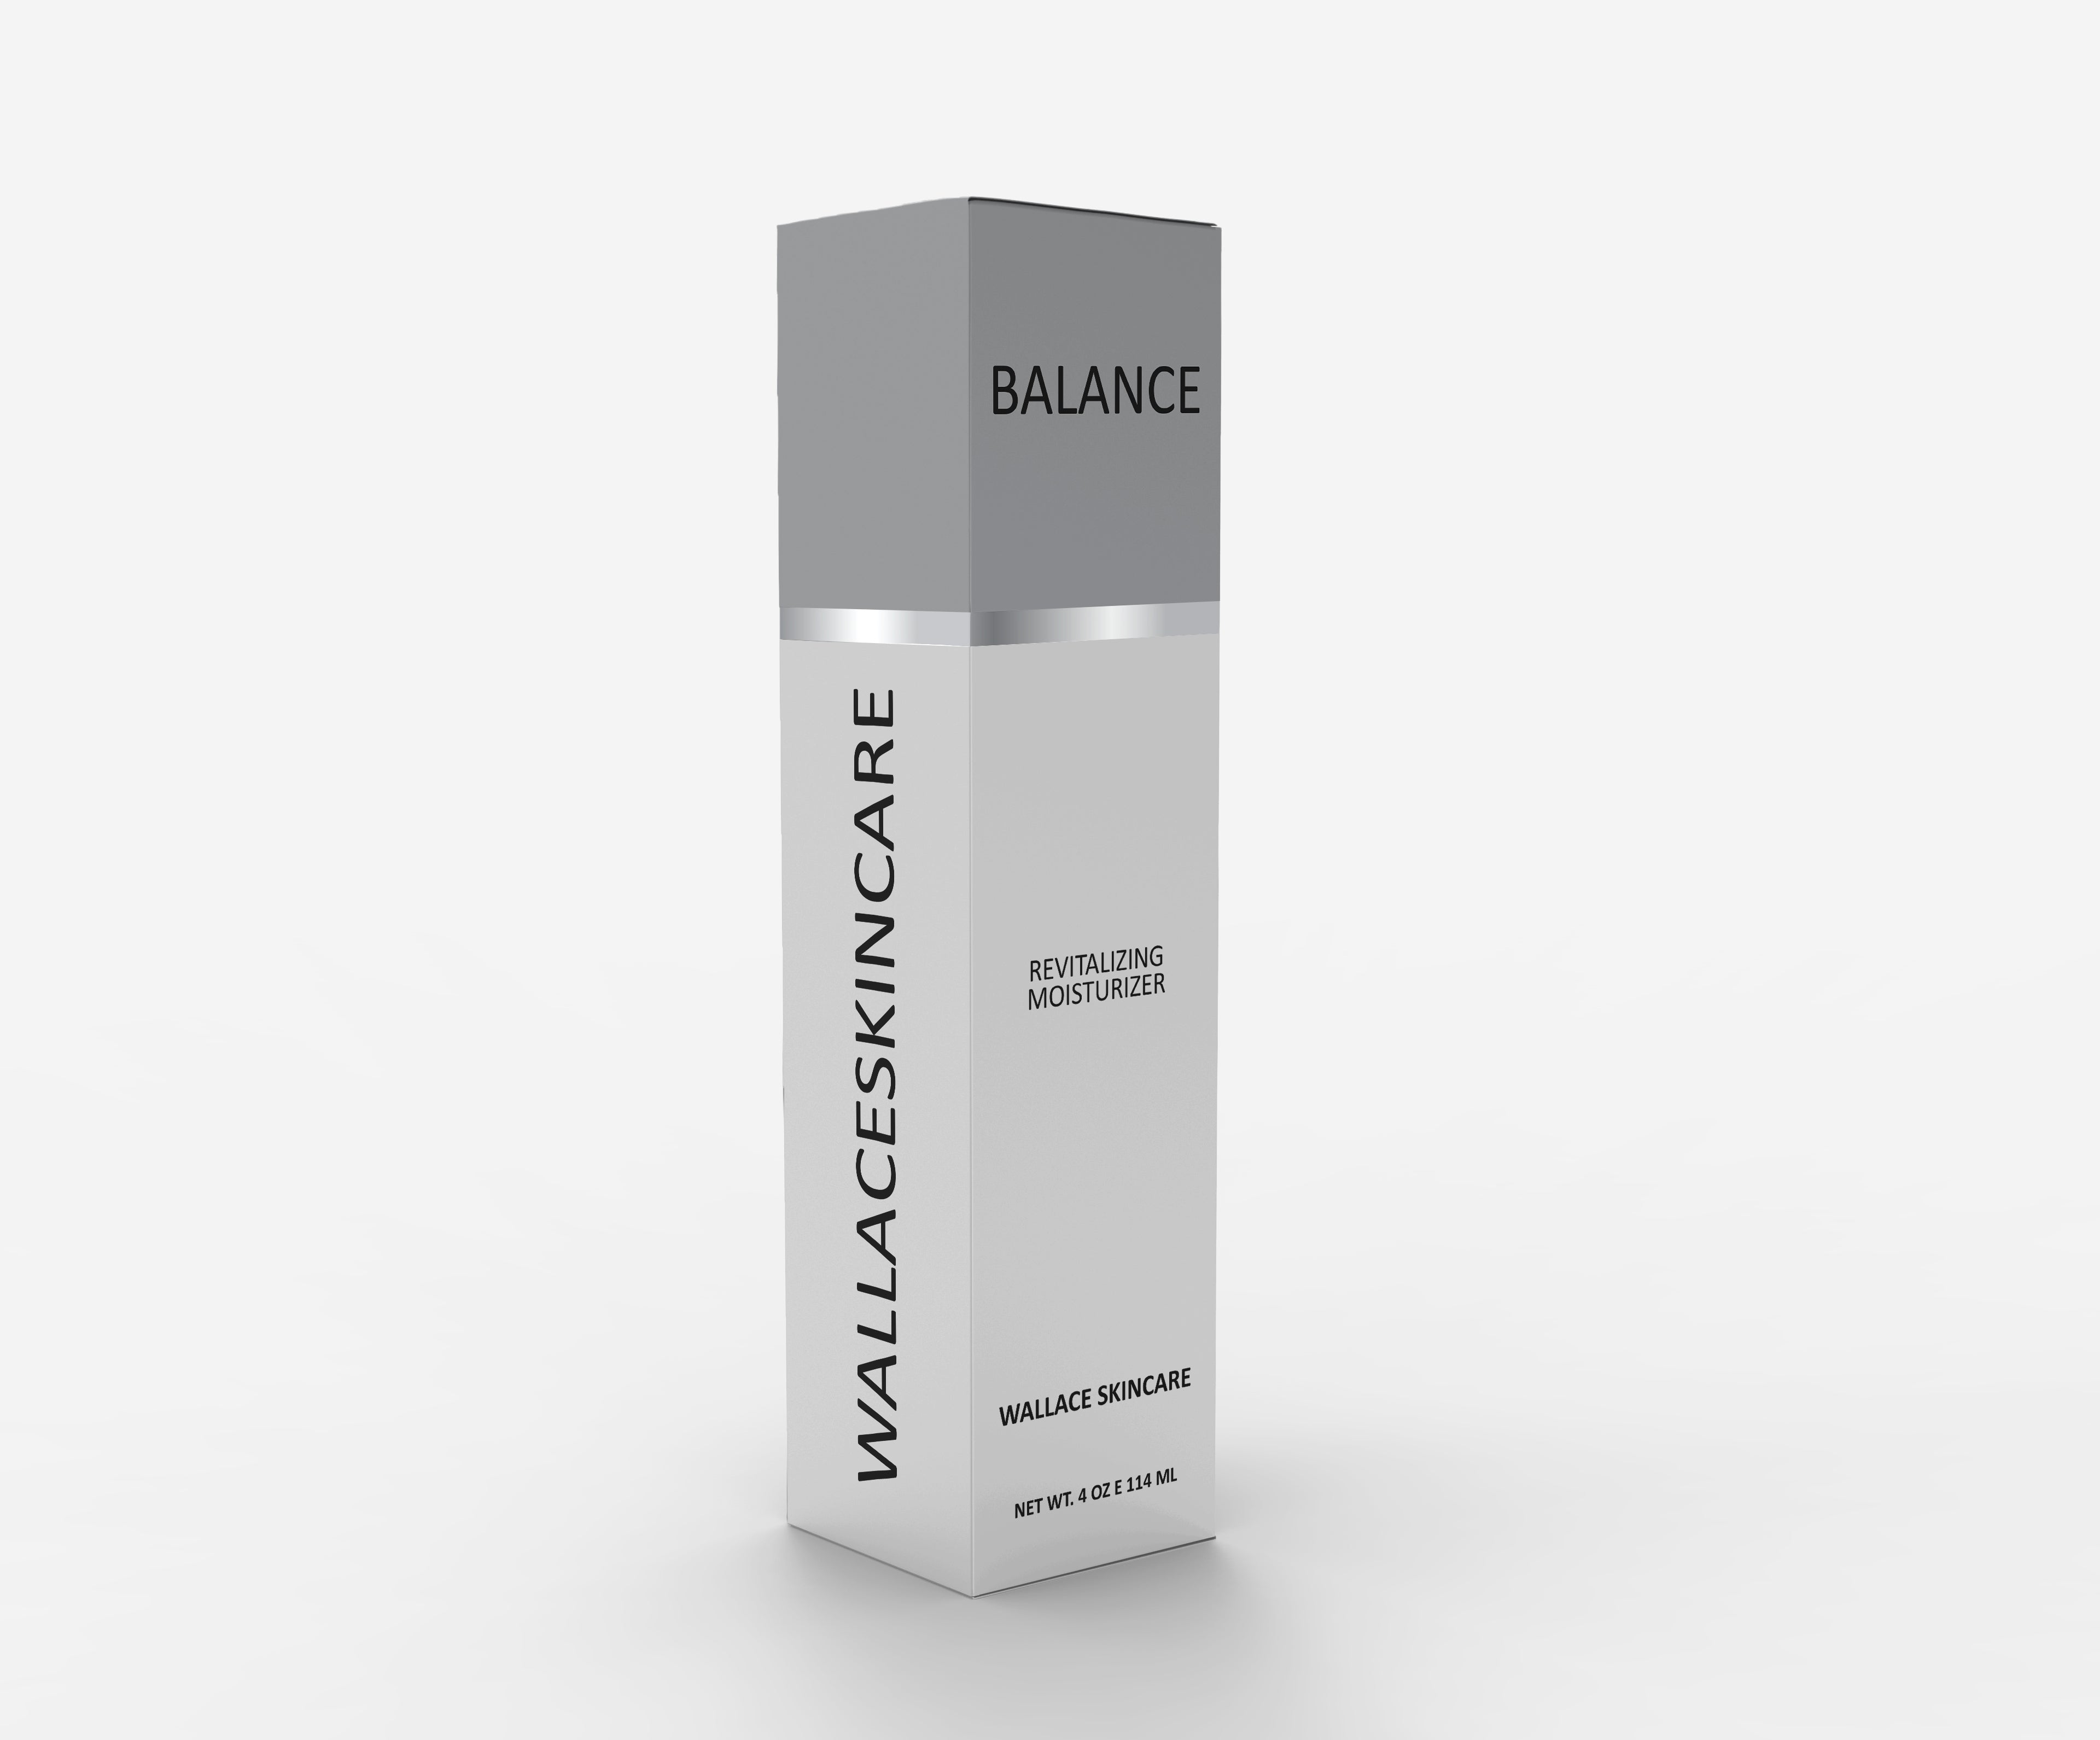  Balance Moisturizer 2oz by Wallace Skincare Wallace Skincare Perfumarie